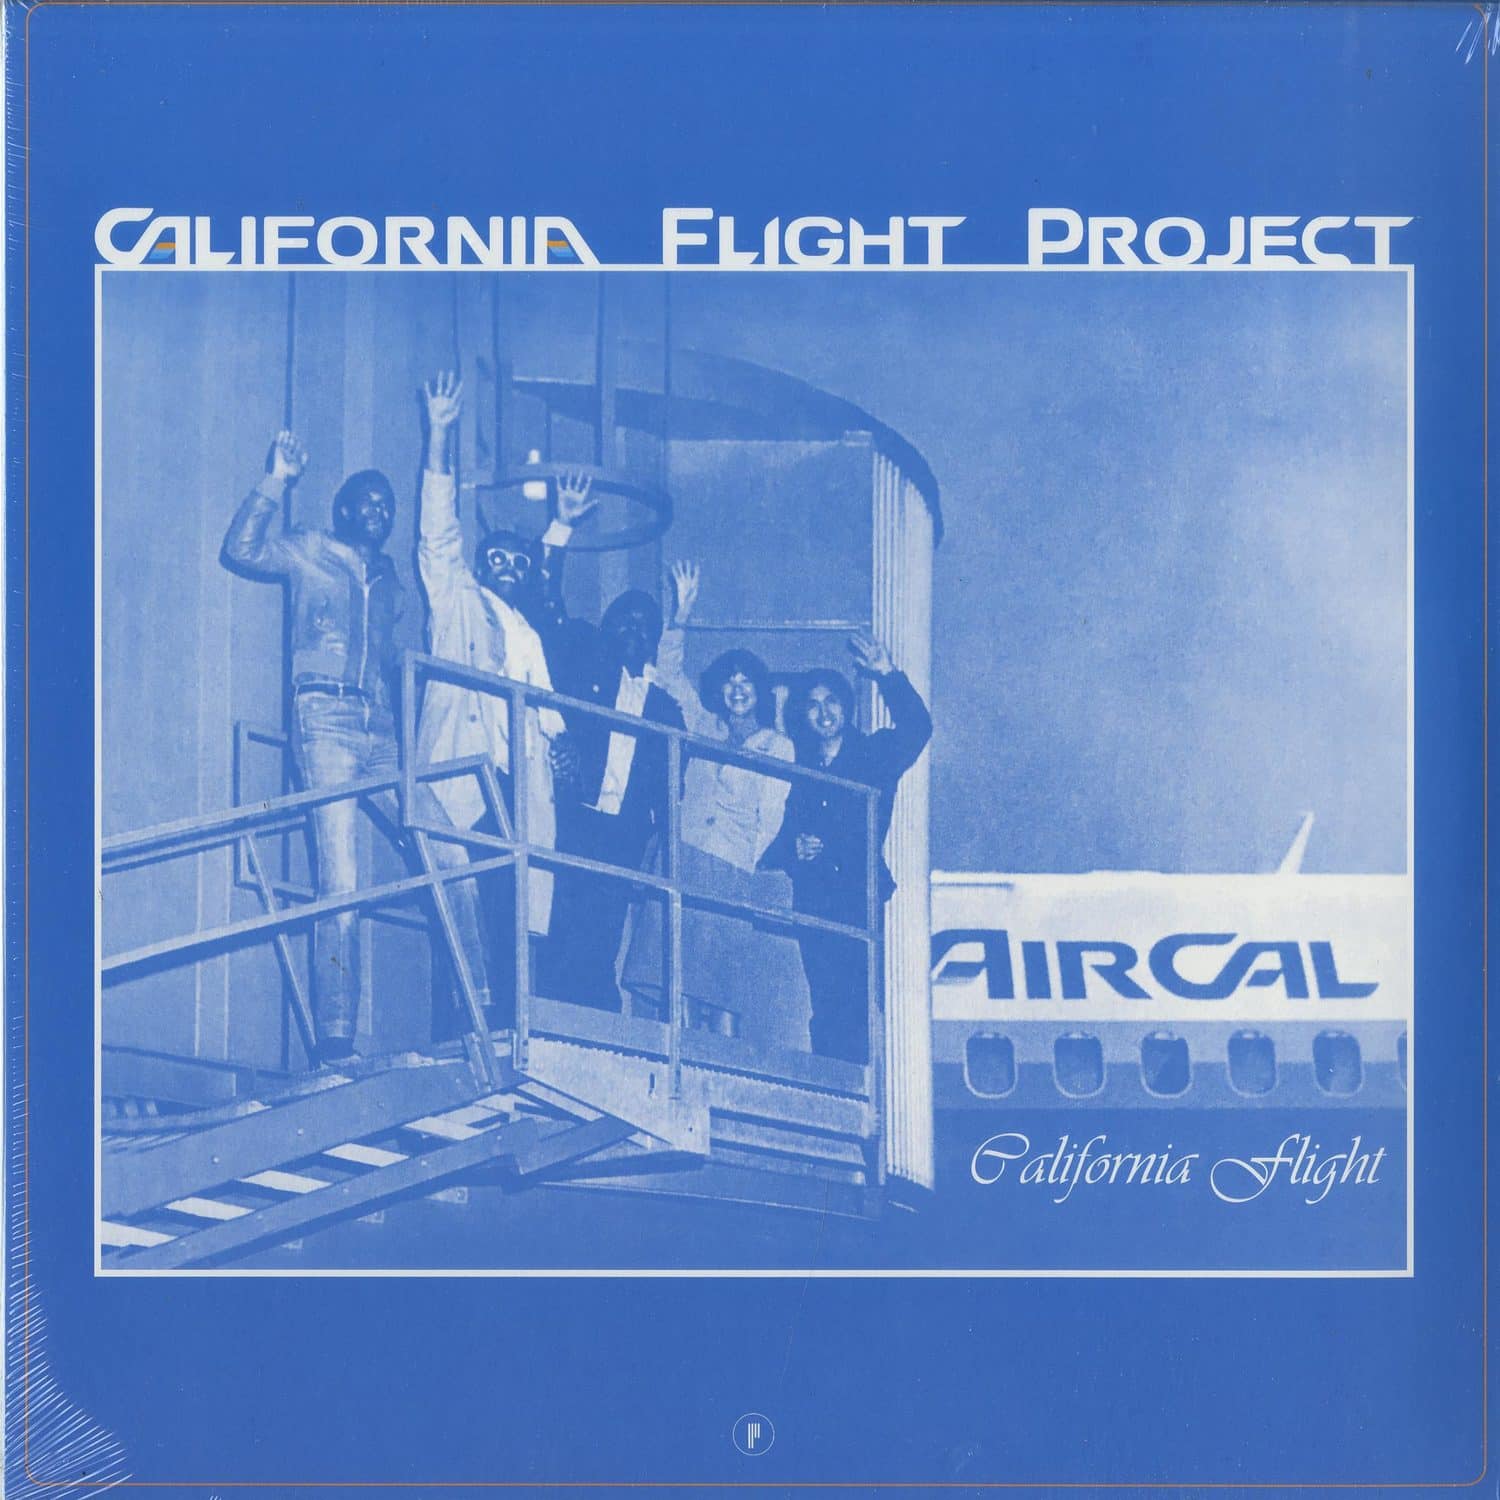 California Flight Project - CALIFORNIA FLIGHT 